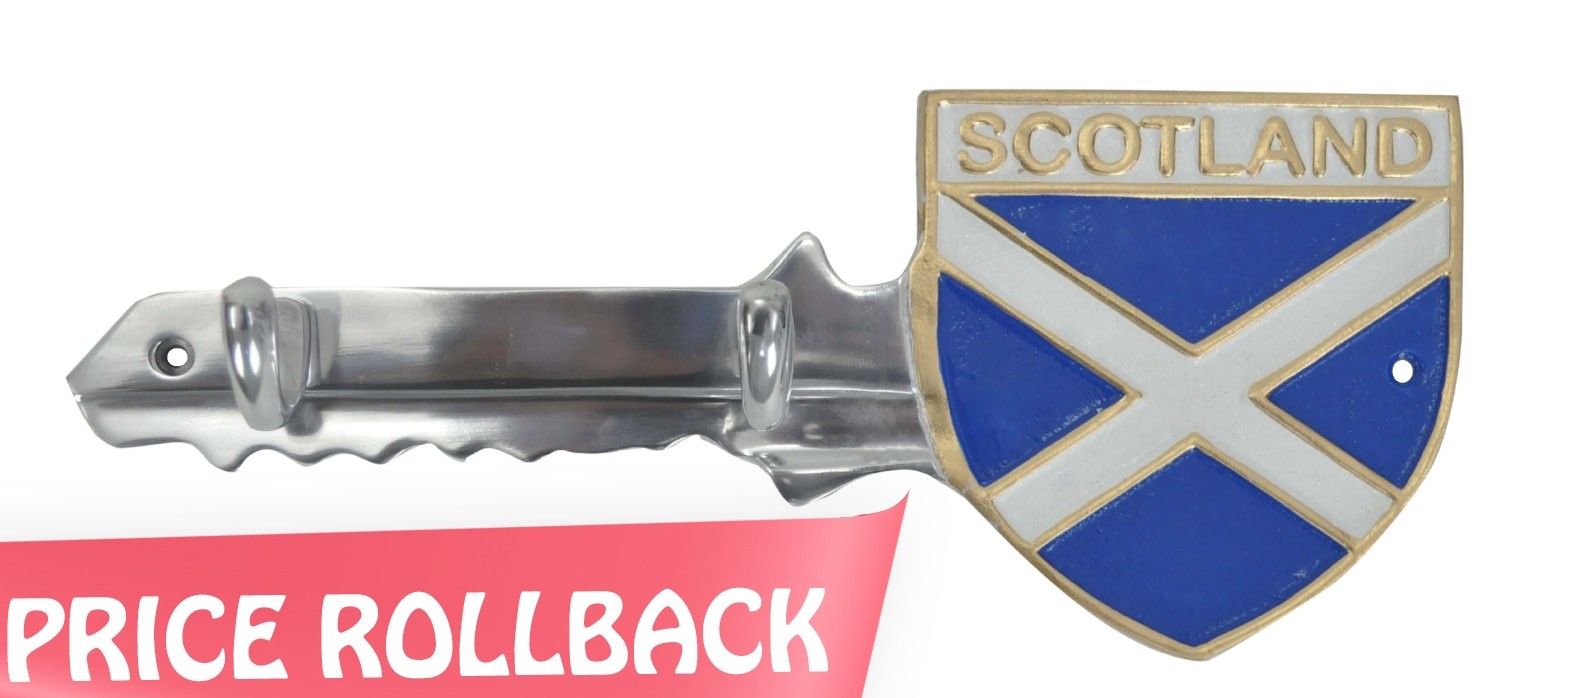 Scotland Key Holders Aluminium With 2 Hooks 30cm